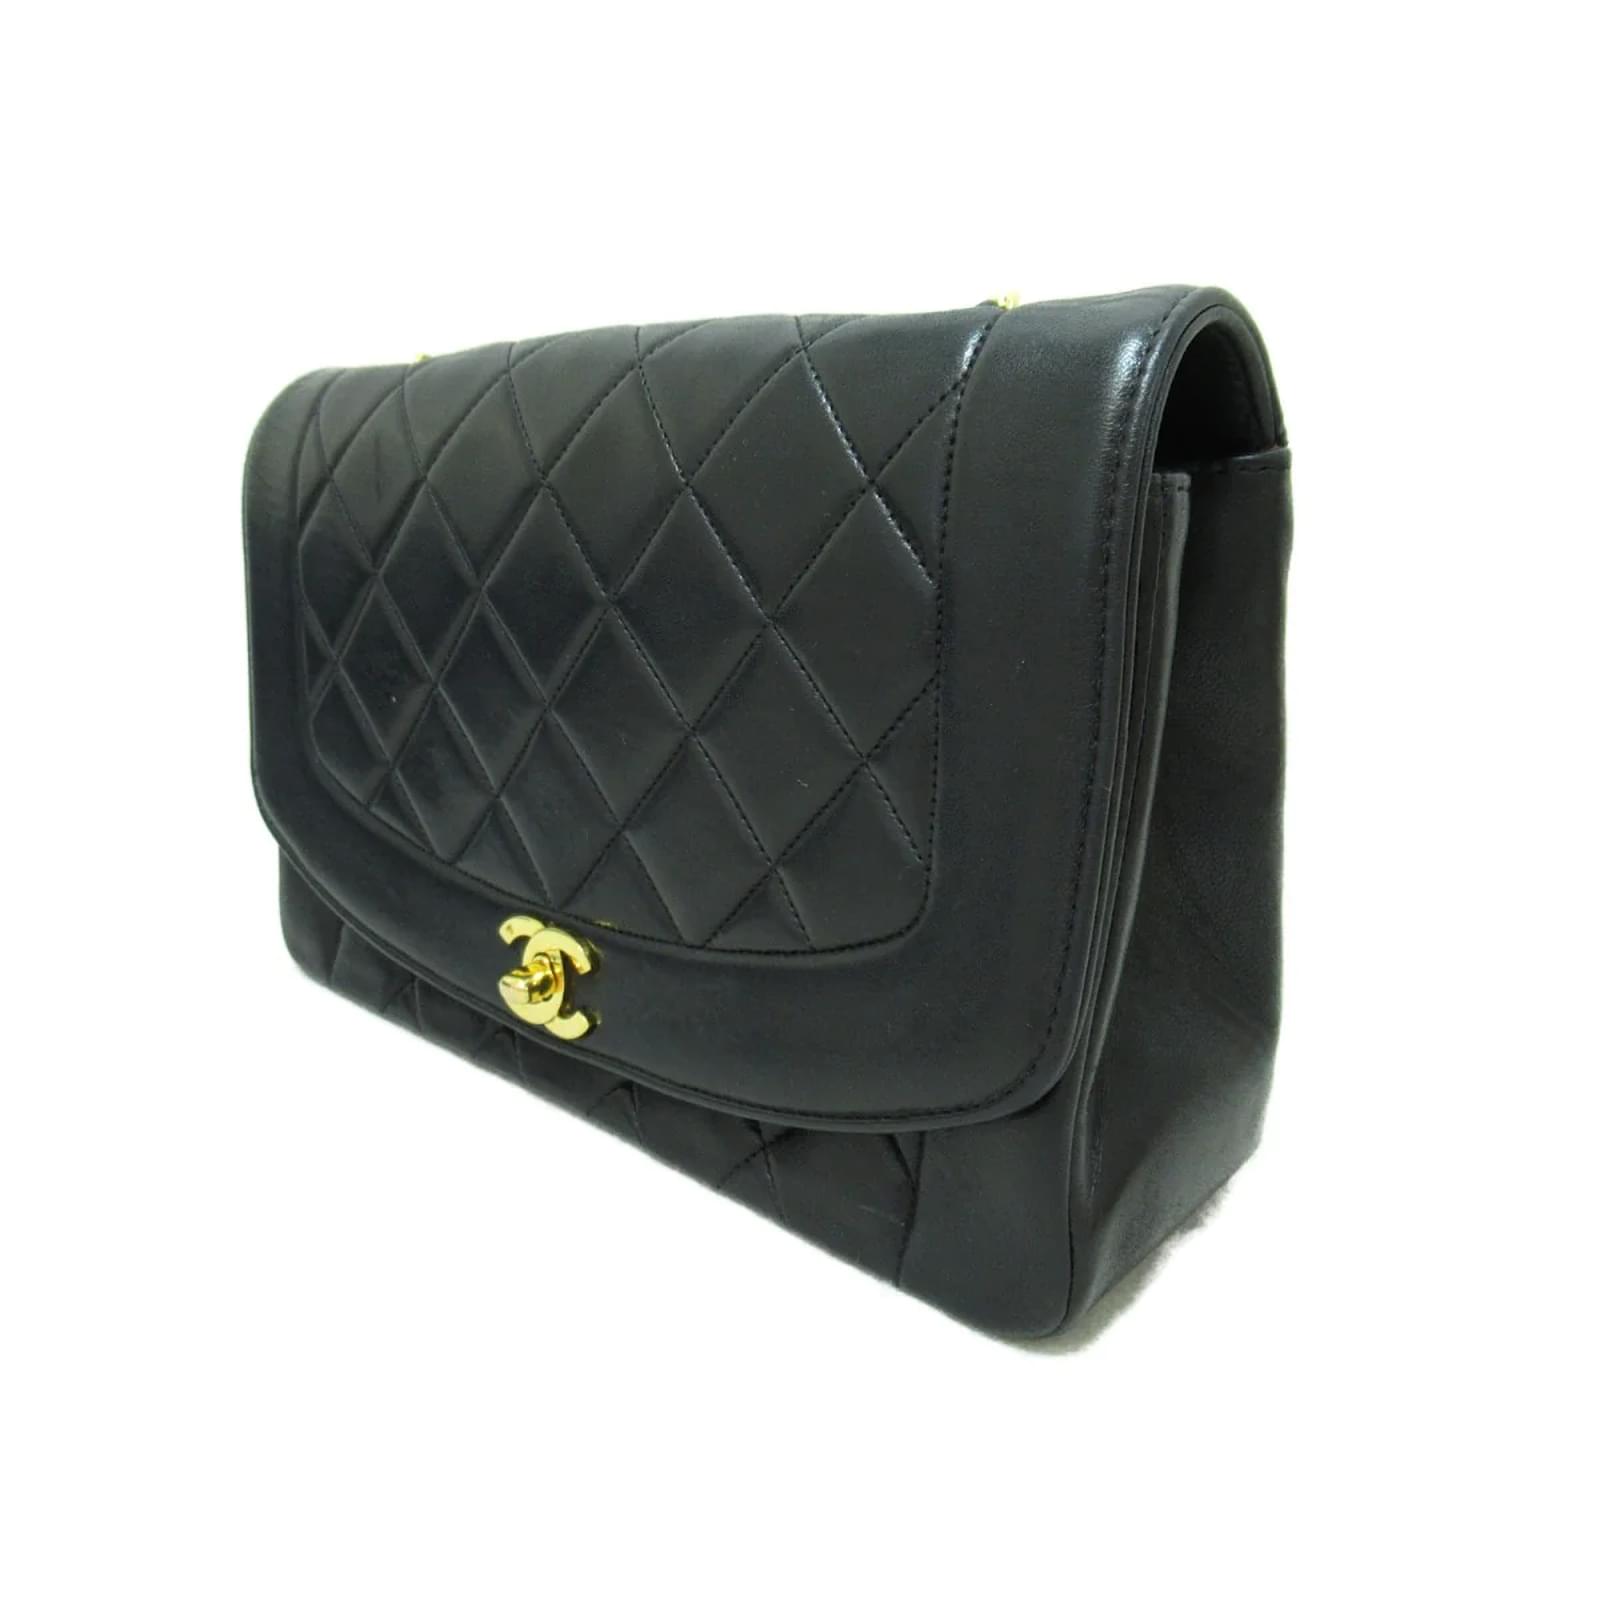 Chanel Diana Flap Crossbody Lambskin Leather Bag,Black